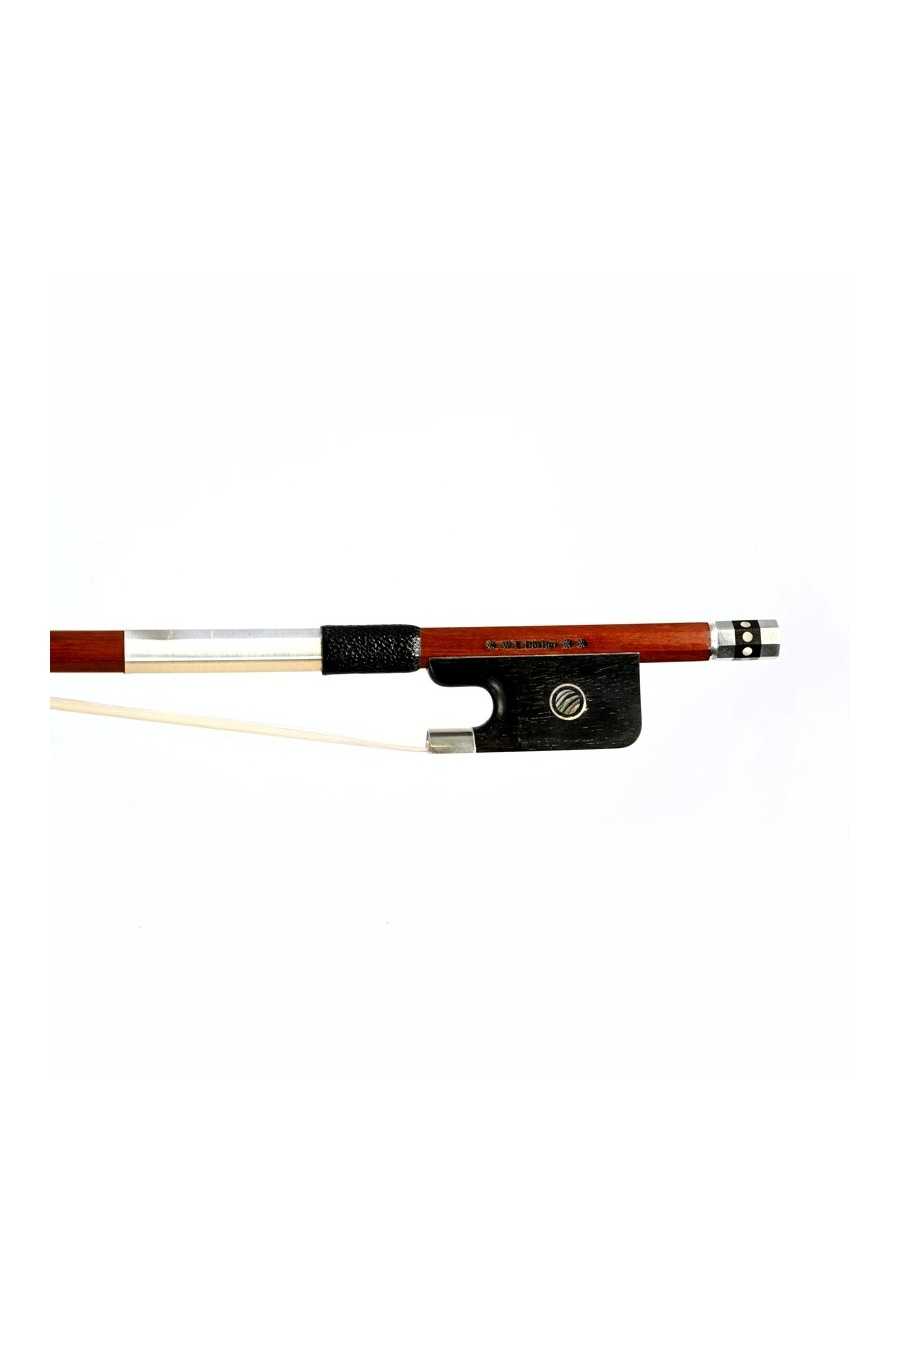 Dorfler Cello Bow - 21 Pernambuco Wood - Genuine Silver Trimming - Master Bow - Round